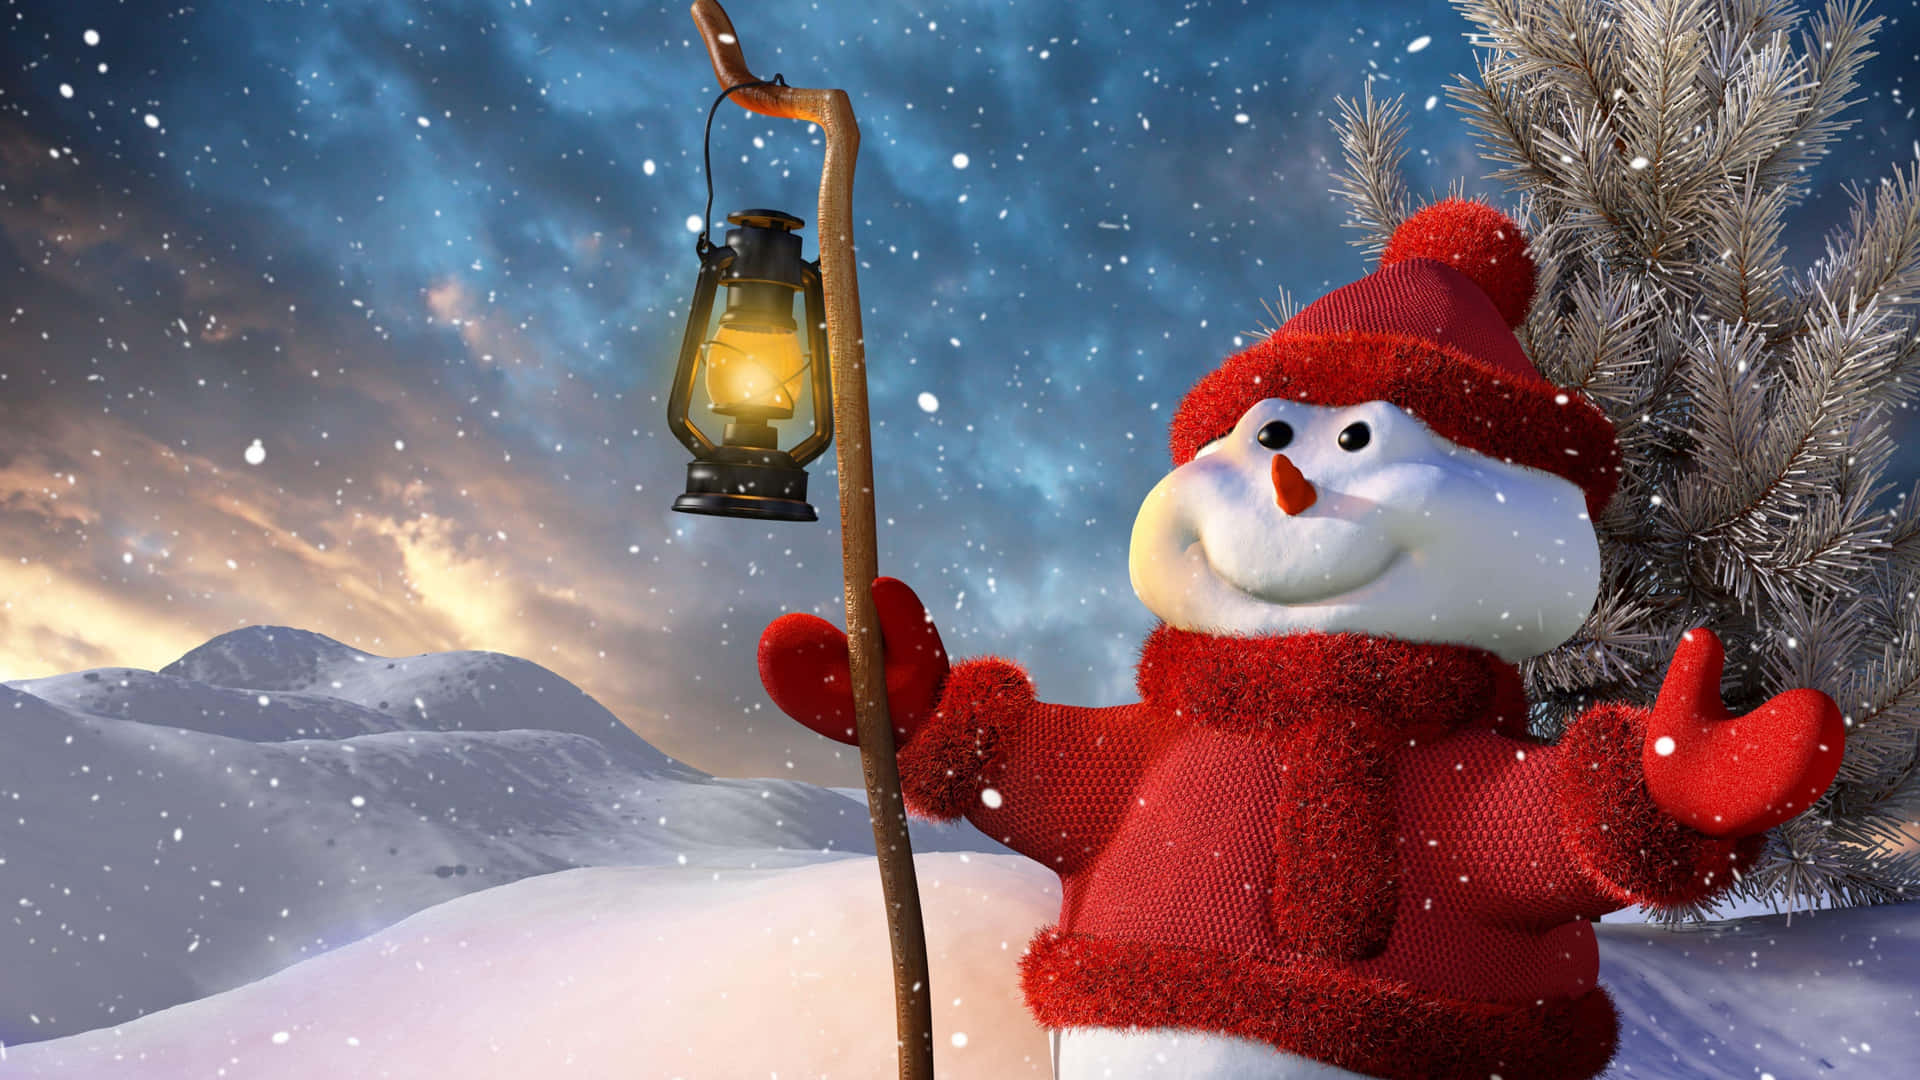 Cheerful Snowman With Lantern Winter Night.jpg Wallpaper